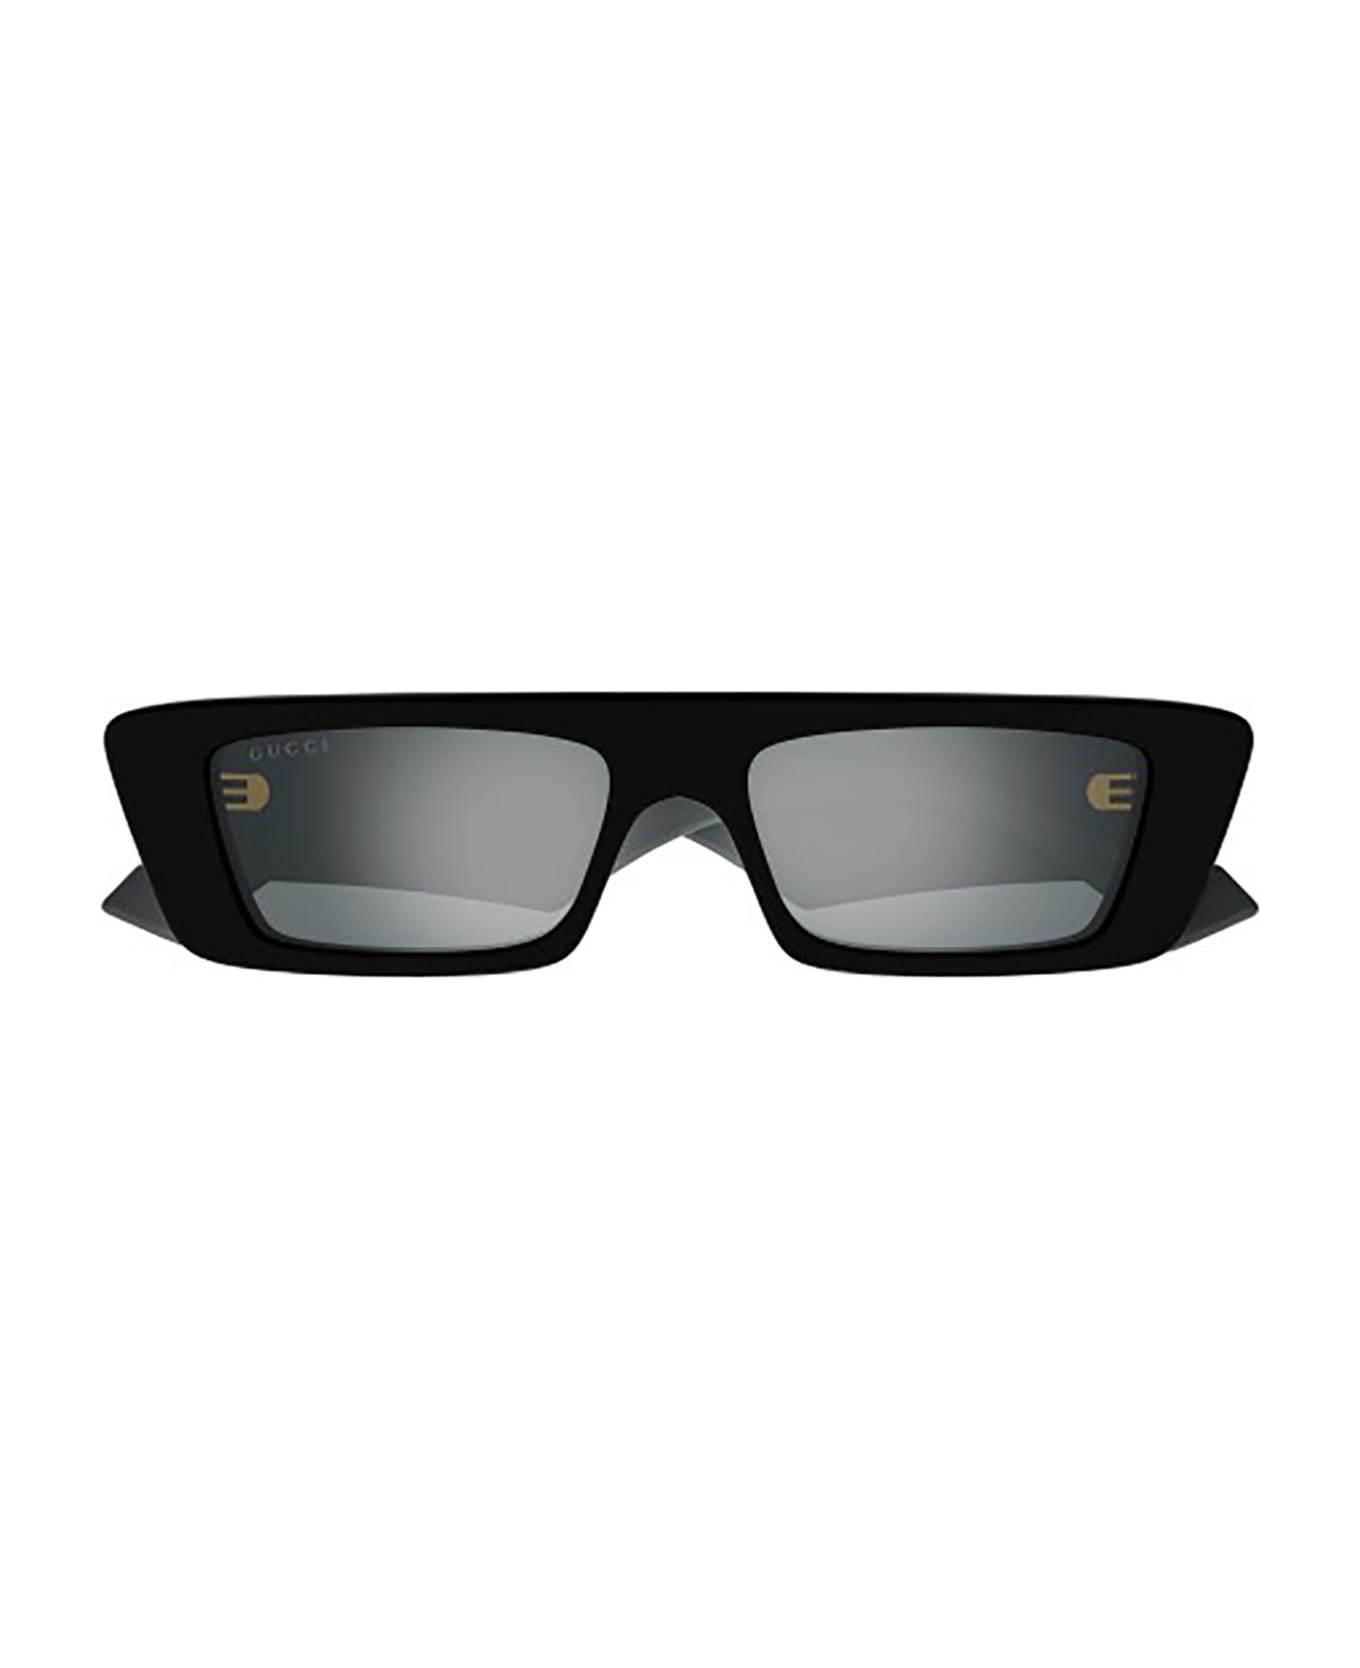 Gucci Eyewear GG1331S Sunglasses - Black Grey Silver